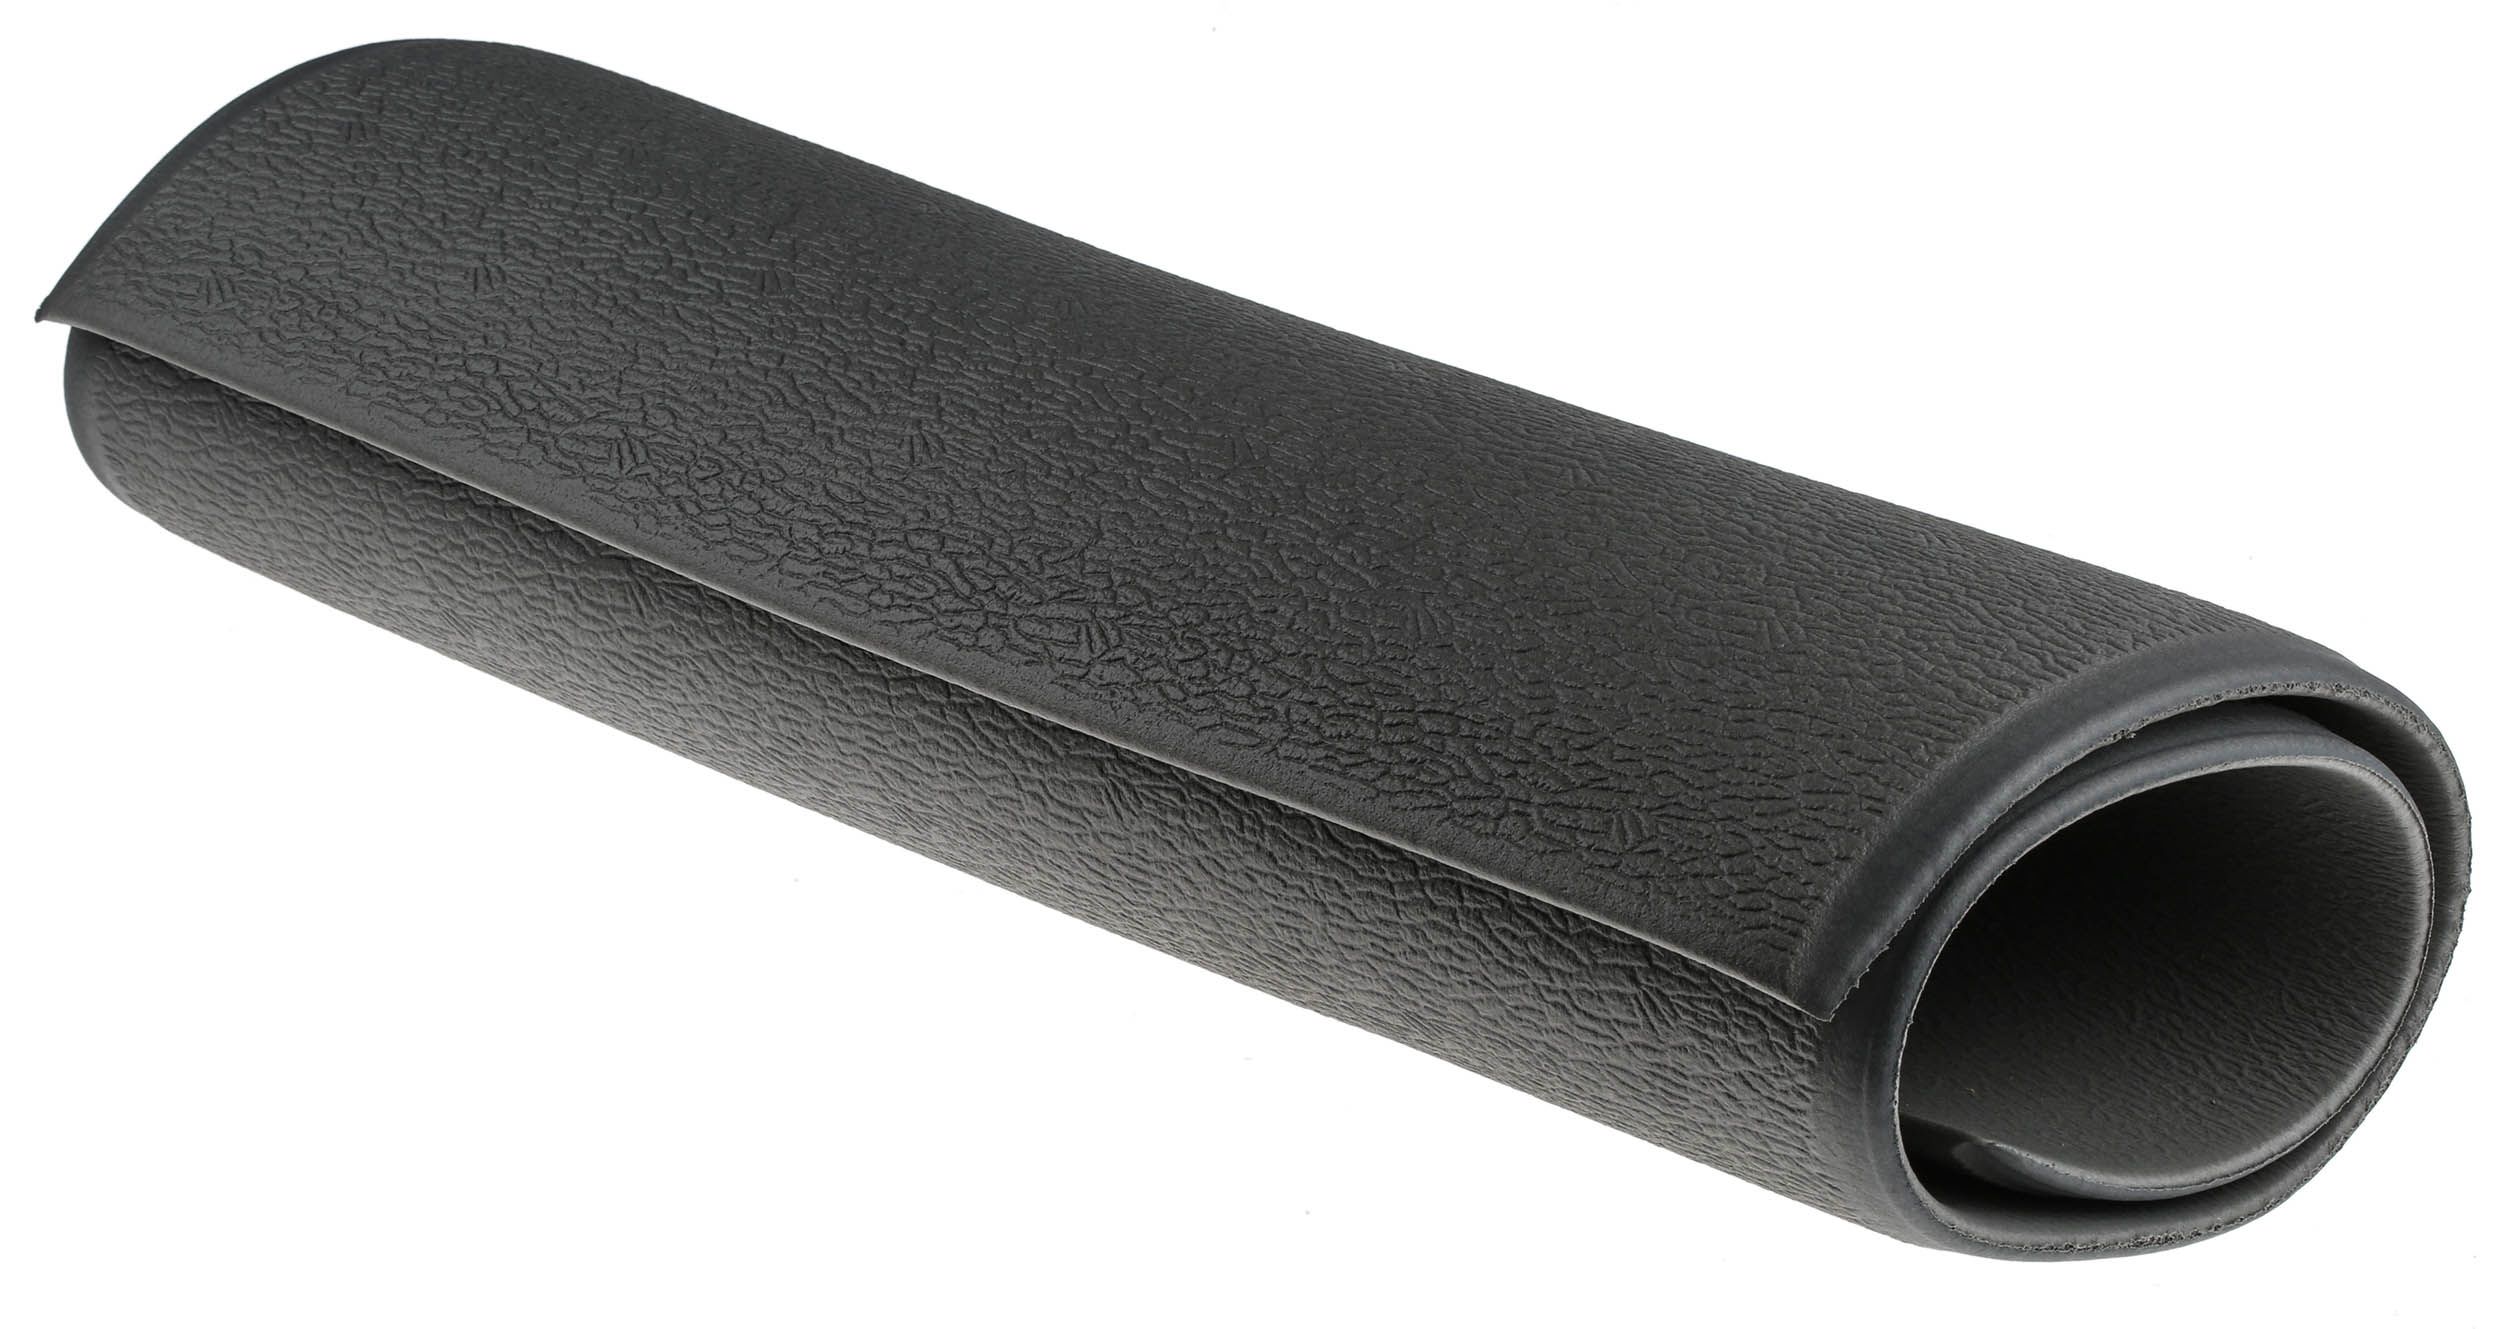 Grey Floor ESD-Safe Mat, 900mm x 600mm x 9mm